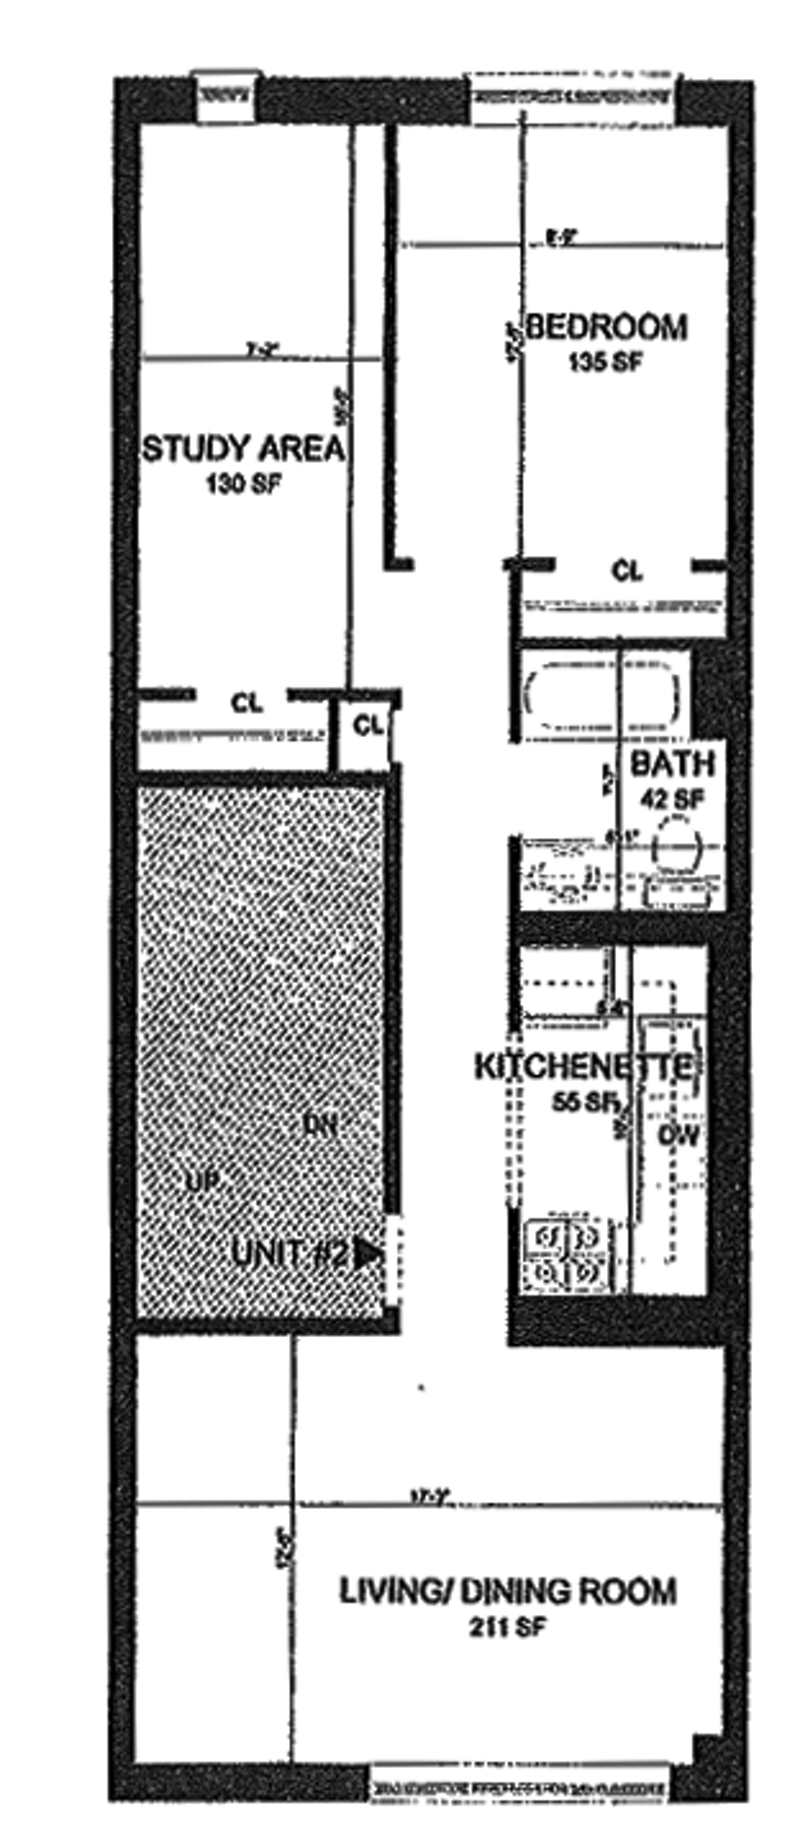 Floorplan for 115 West 126th Street, 3